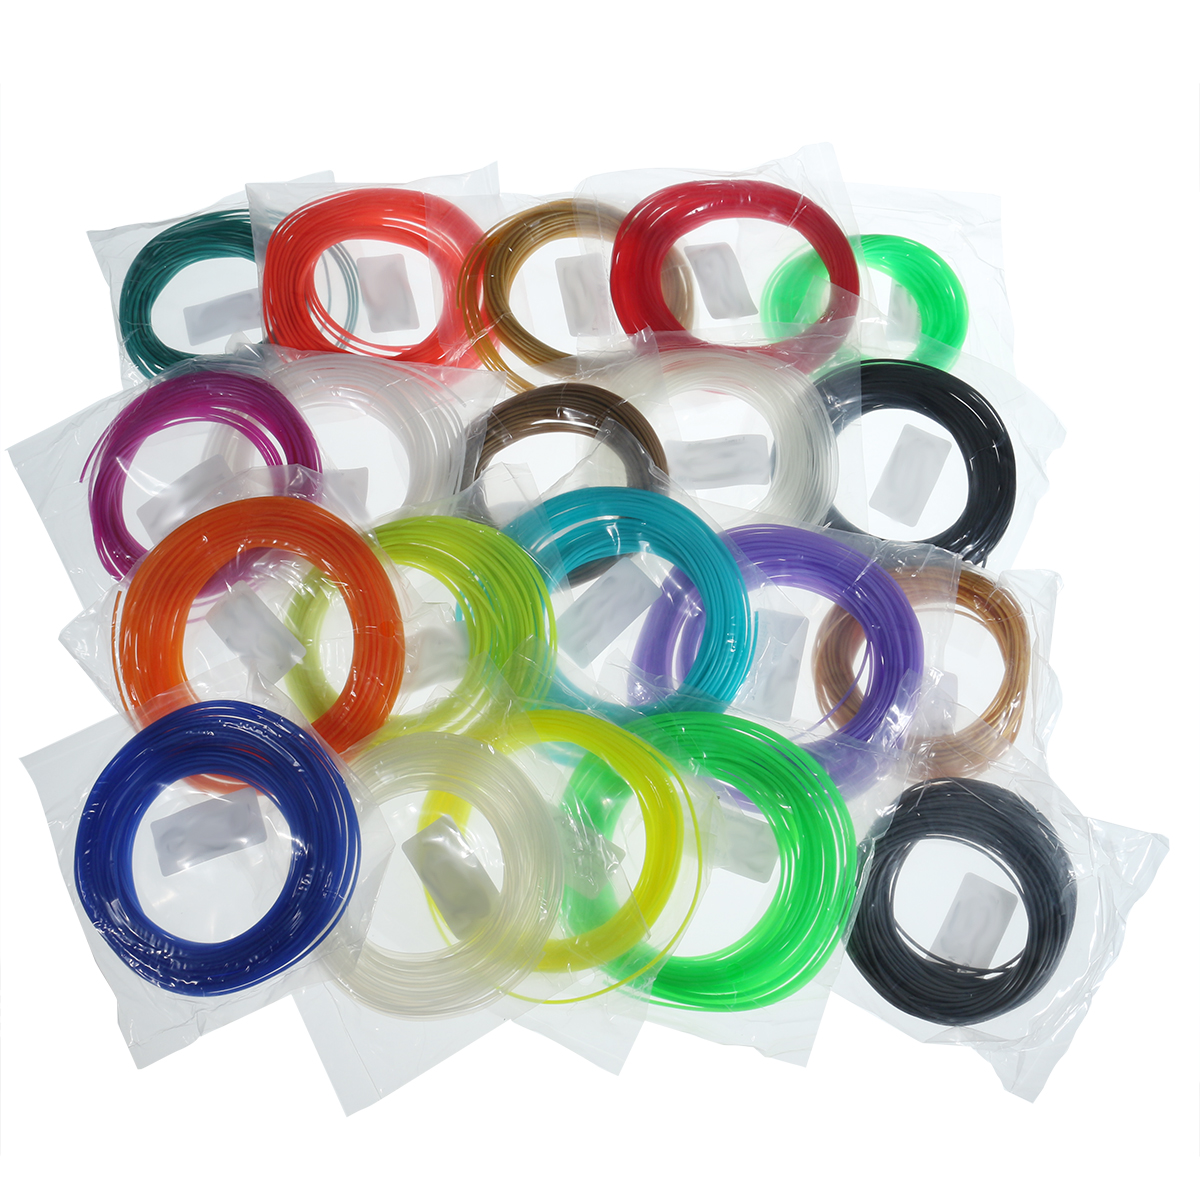 20 Colors/Pack 5/10m Length Per Color PLA 1.75mm Filament for 3D Printing Pen 0.4mm Nozzle 9